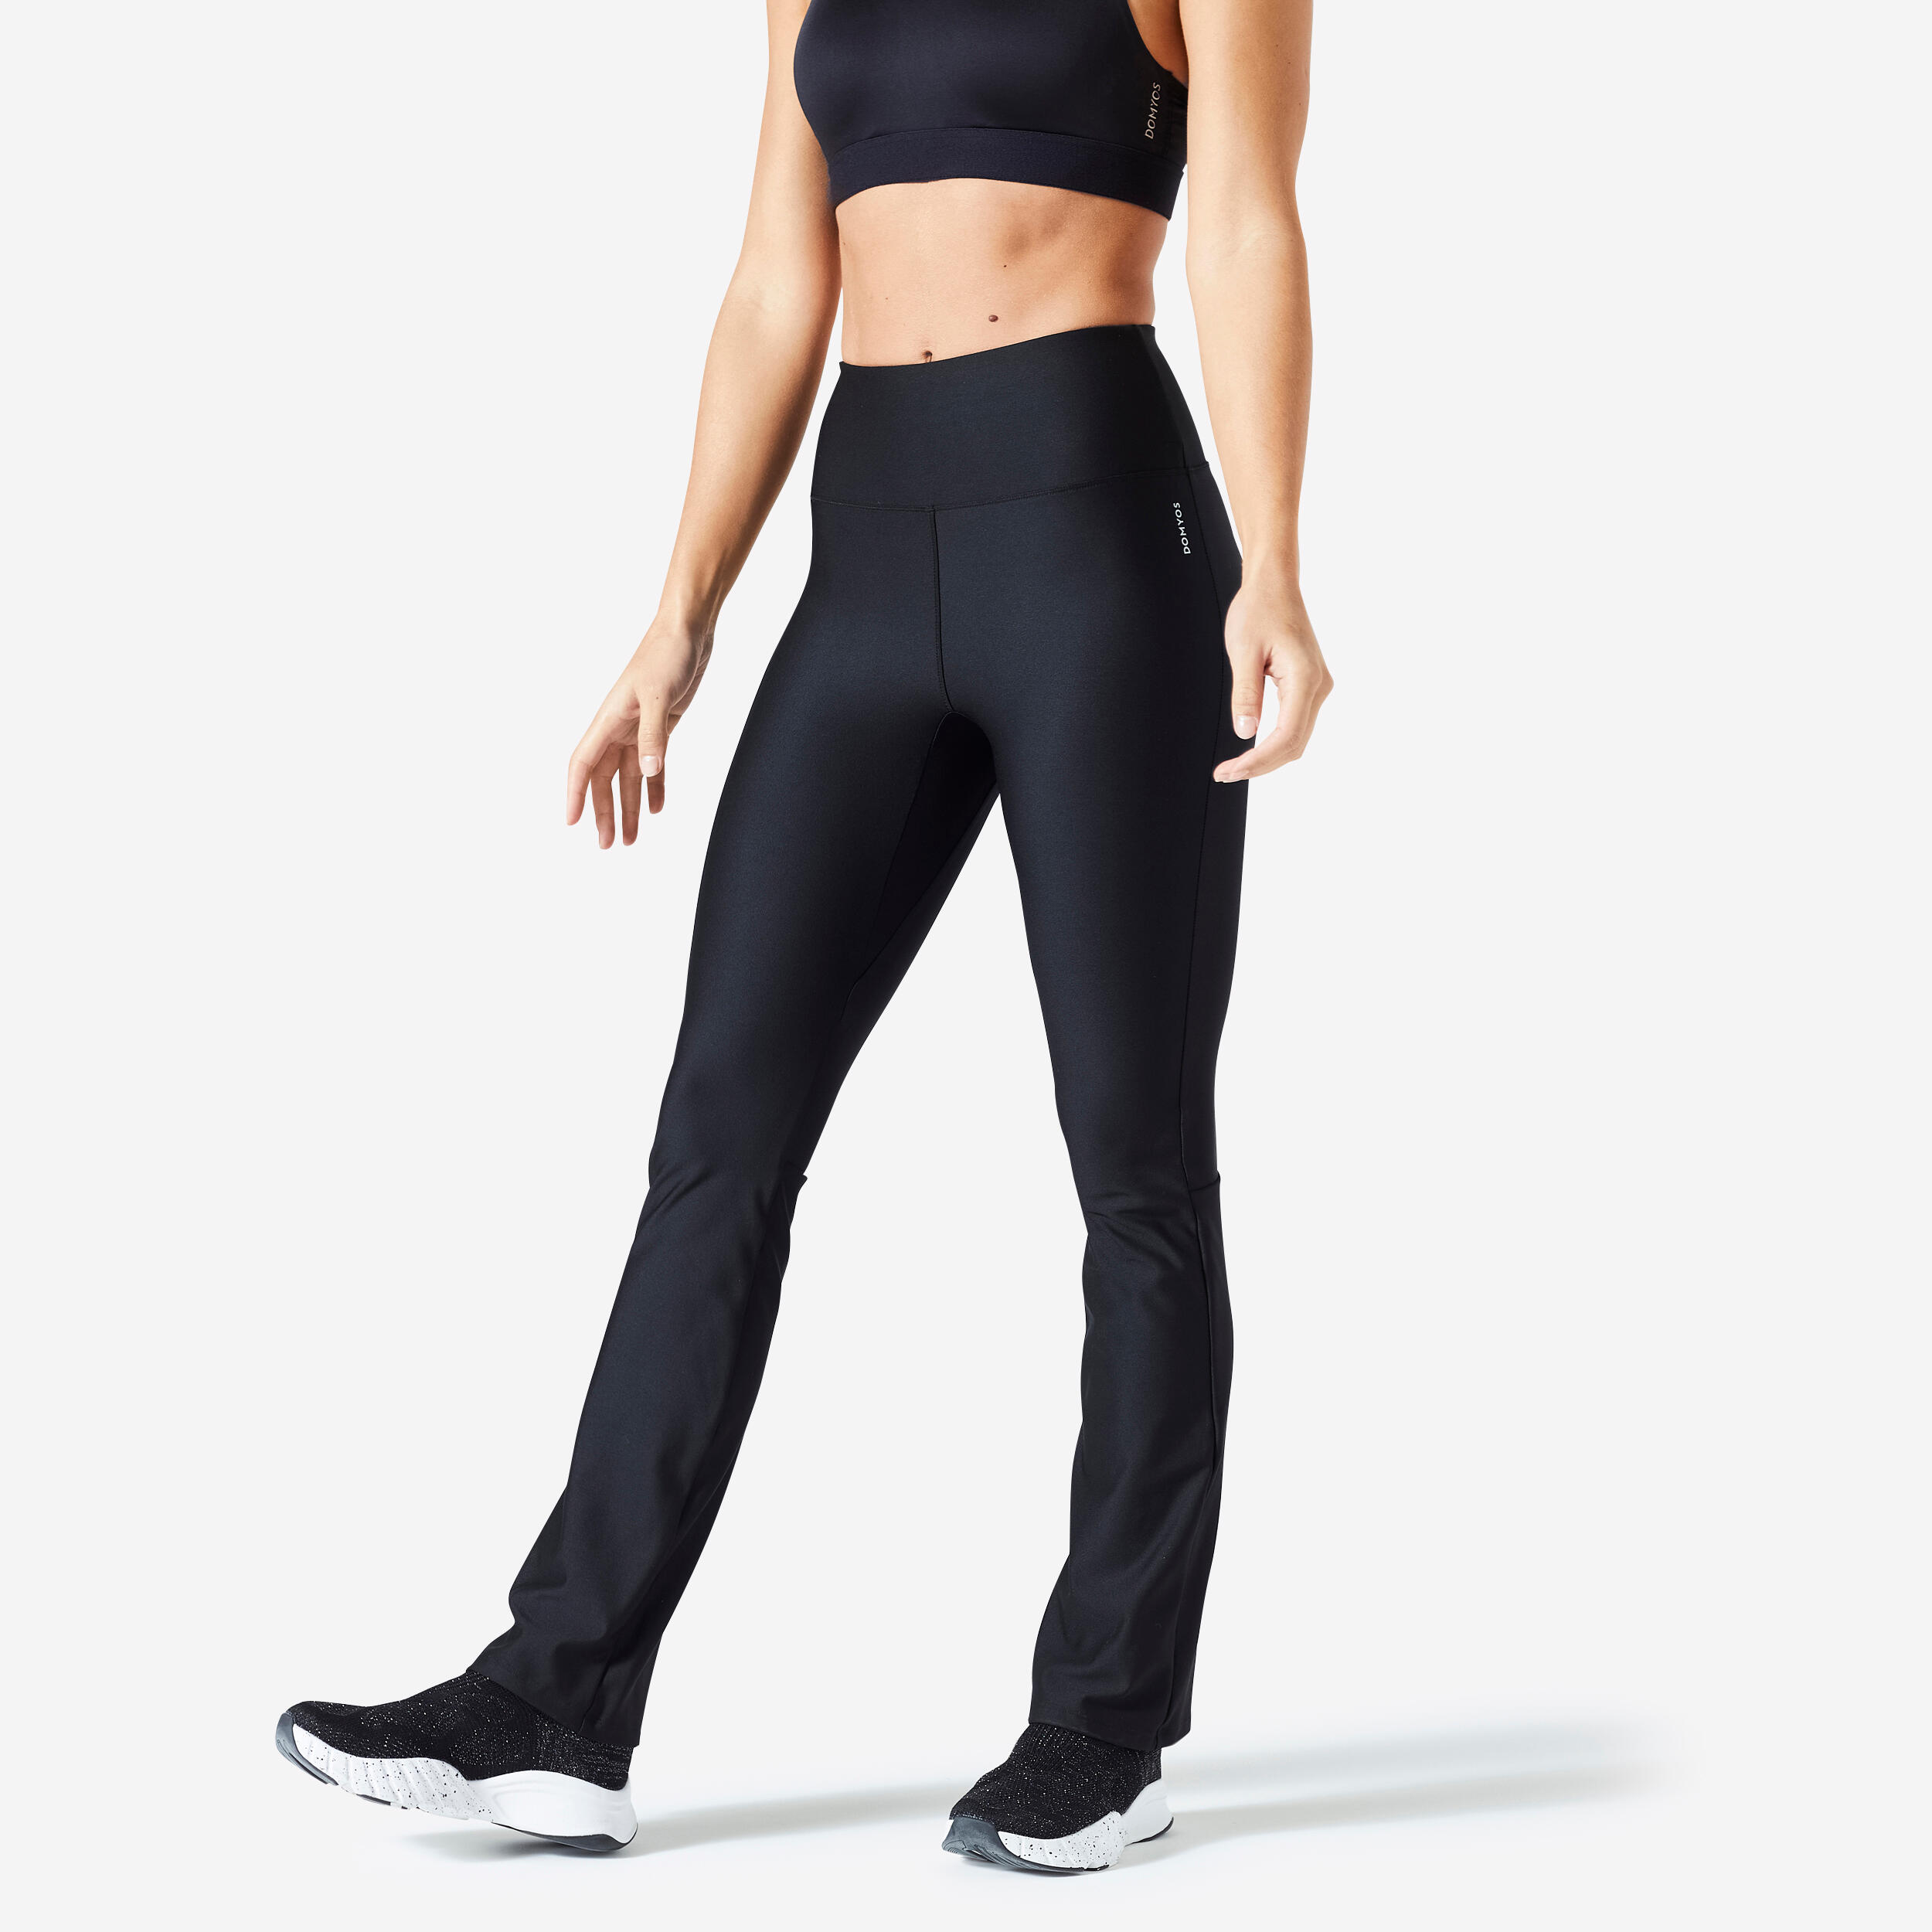 https://contents.mediadecathlon.com/p2429341/k$df96c7dc27dd1f28df54a79d104b4500/women-s-fitness-cardio-regular-stretch-leggings-fti-100-black-domyos-domyos-8614951.jpg